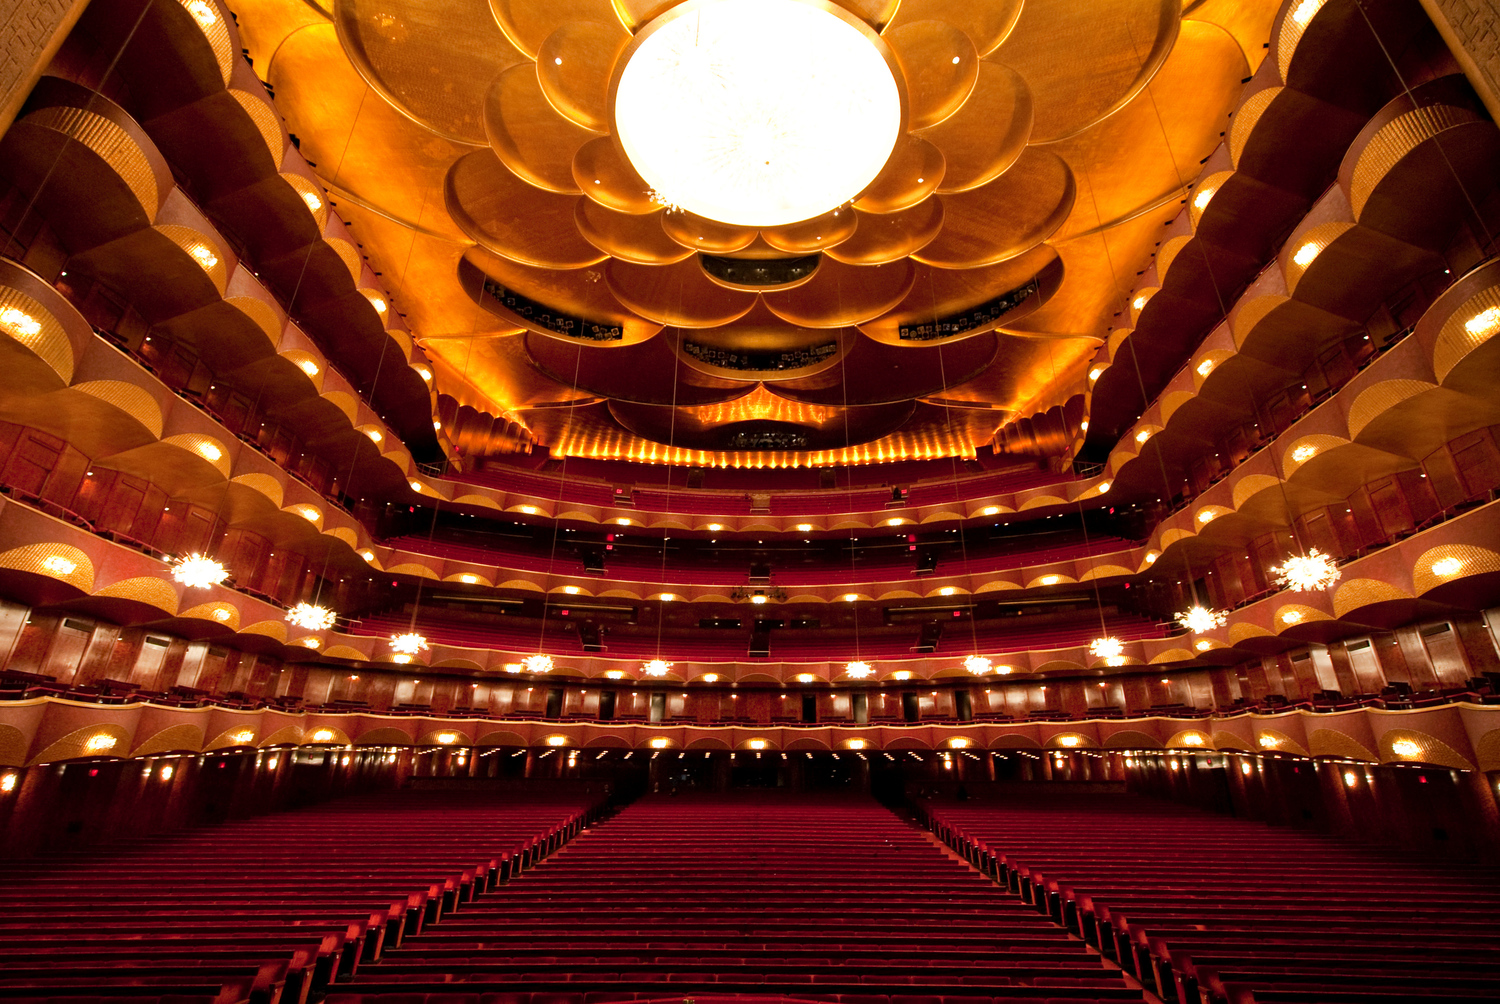 Feature: FRIDAYS UNDER 40 at The Metropolitan Opera 